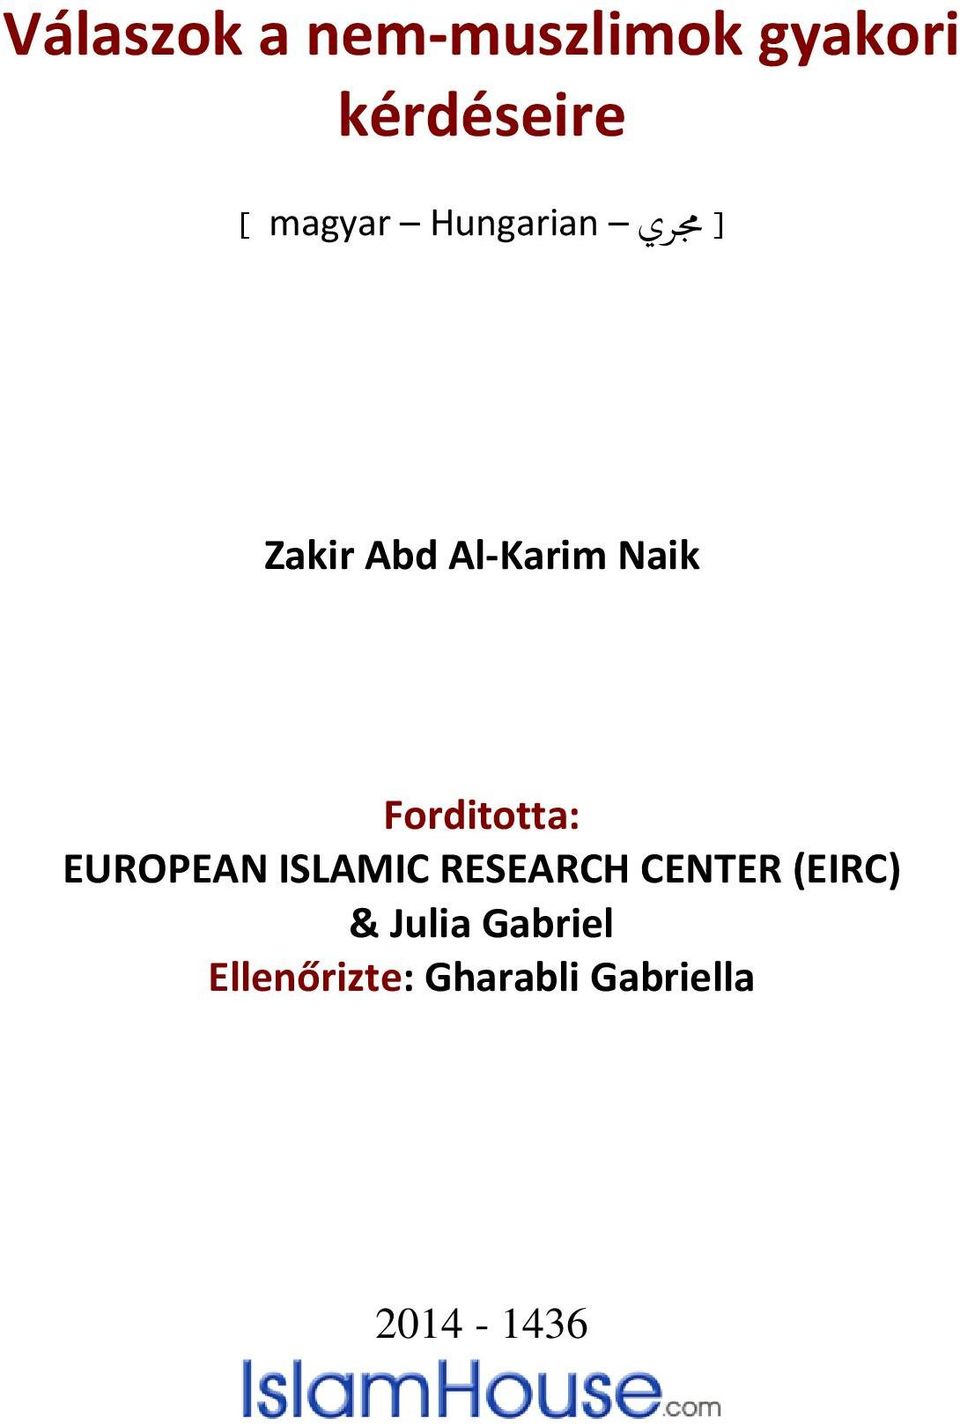 Forditotta: EUROPEAN ISLAMIC RESEARCH CENTER